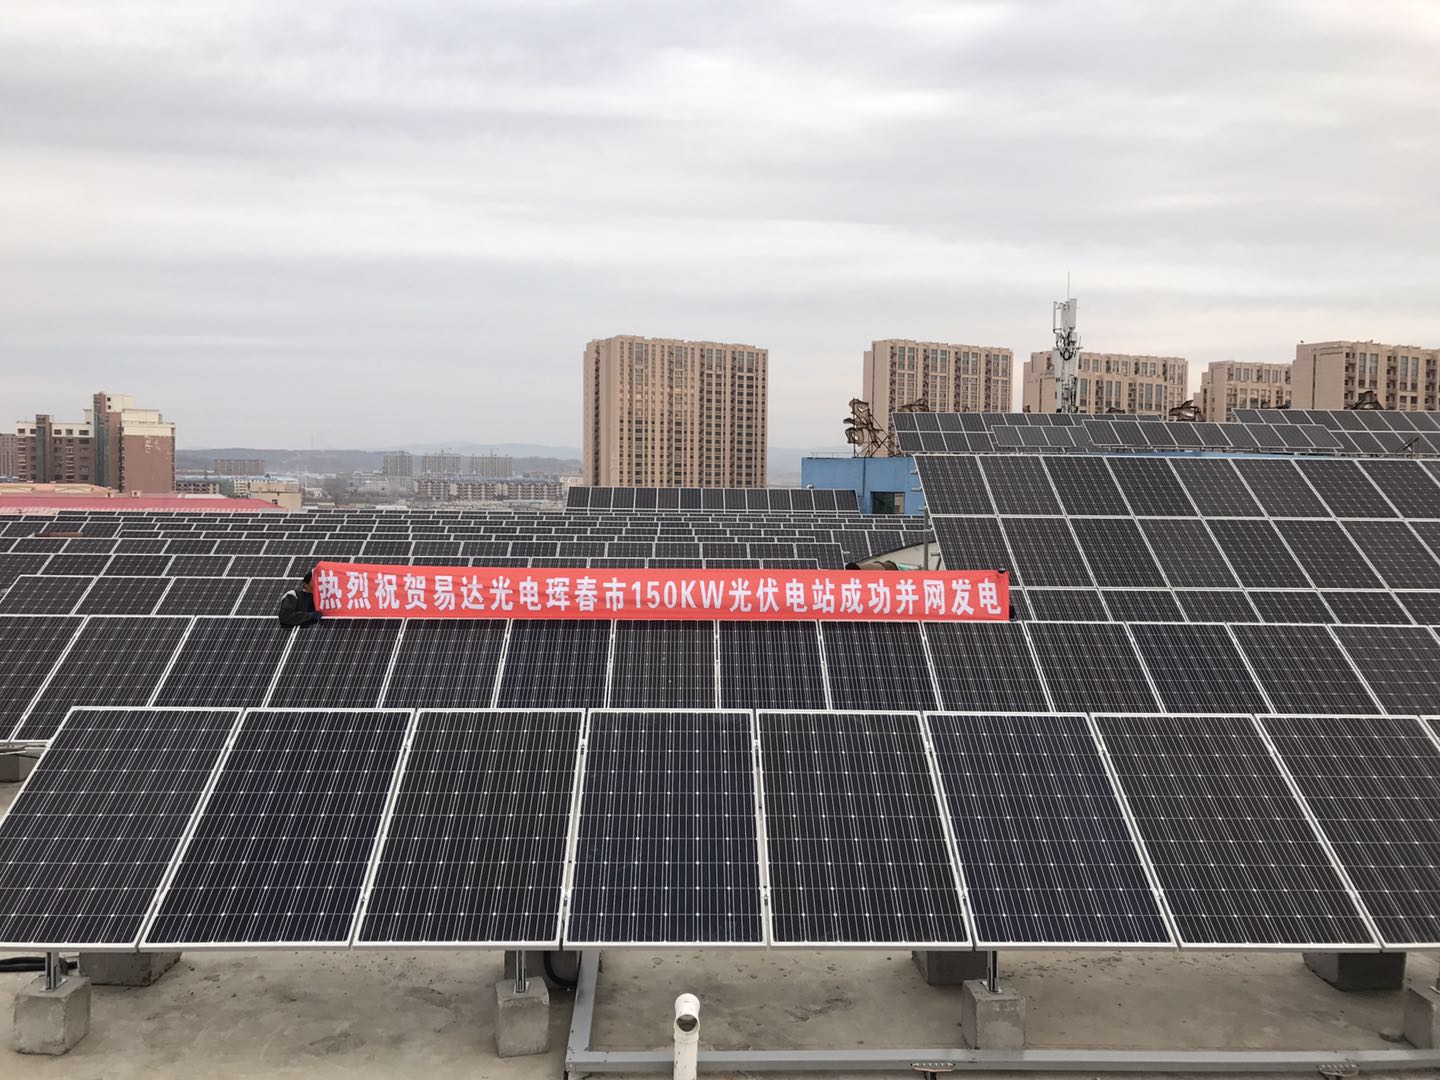 2017.10.22<br/> Hunchun 150kw roof grid power station